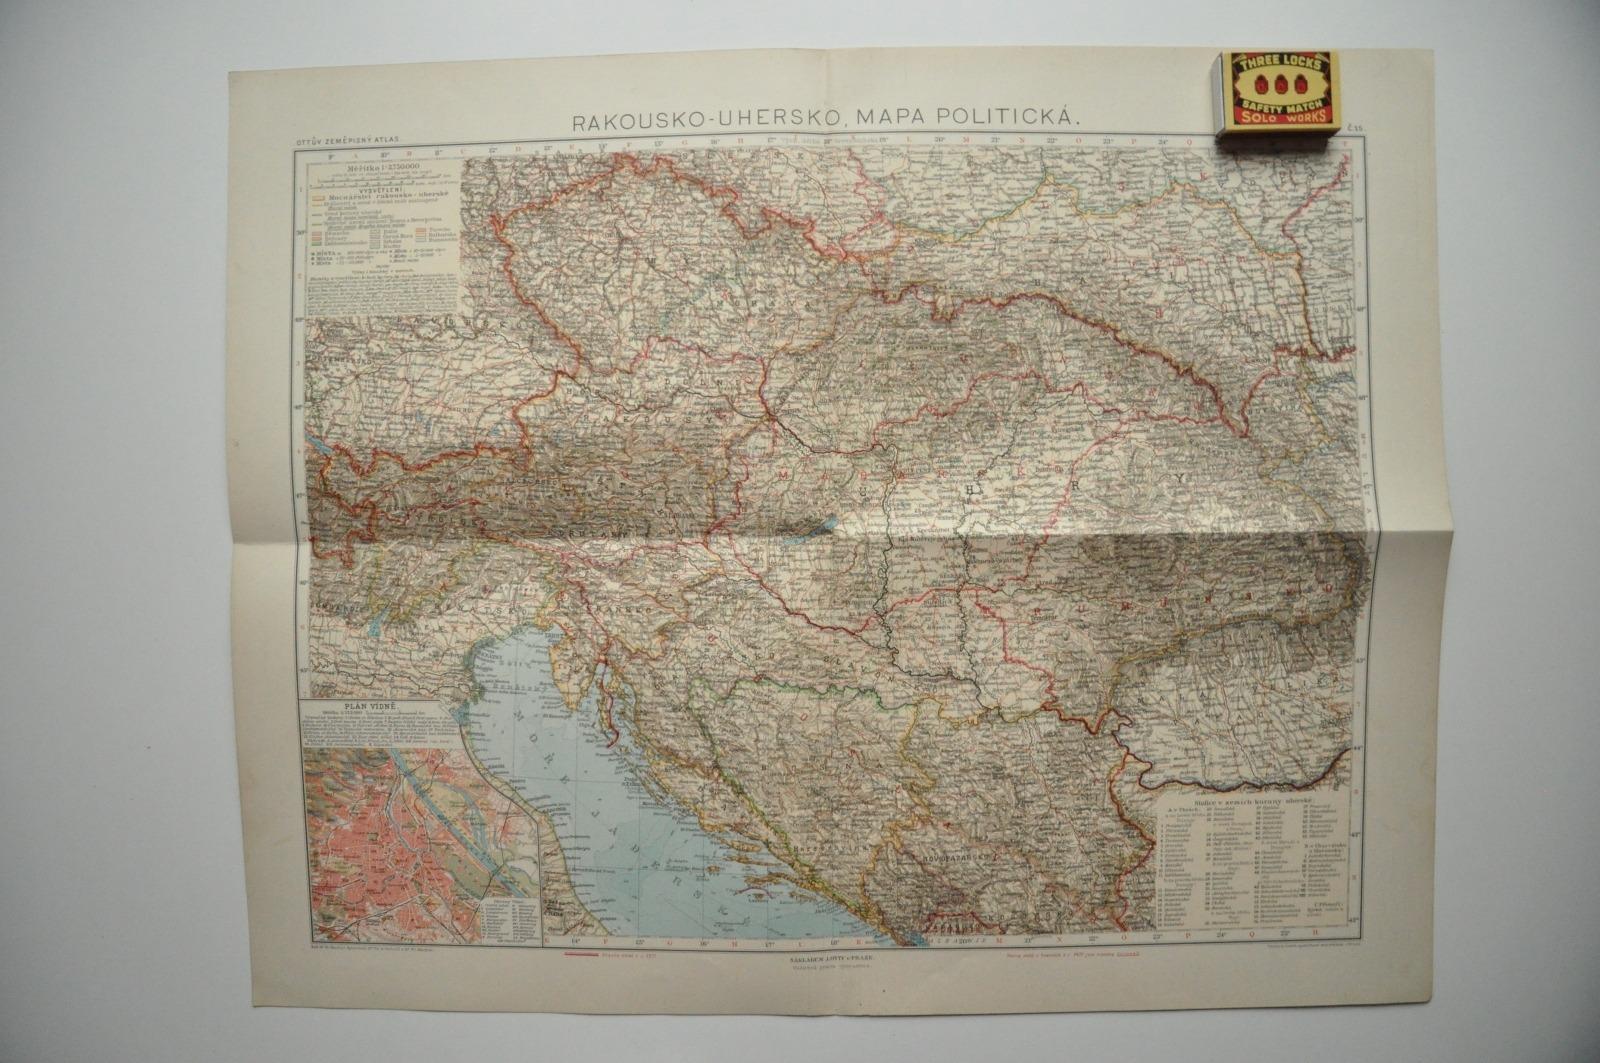 RAKÚSKO-UHÉRSKO - MAPA 1924 - NÁSTUPNÍCKE ŠTÁTY - ČESKOSLOVENSKO - Staré mapy a veduty